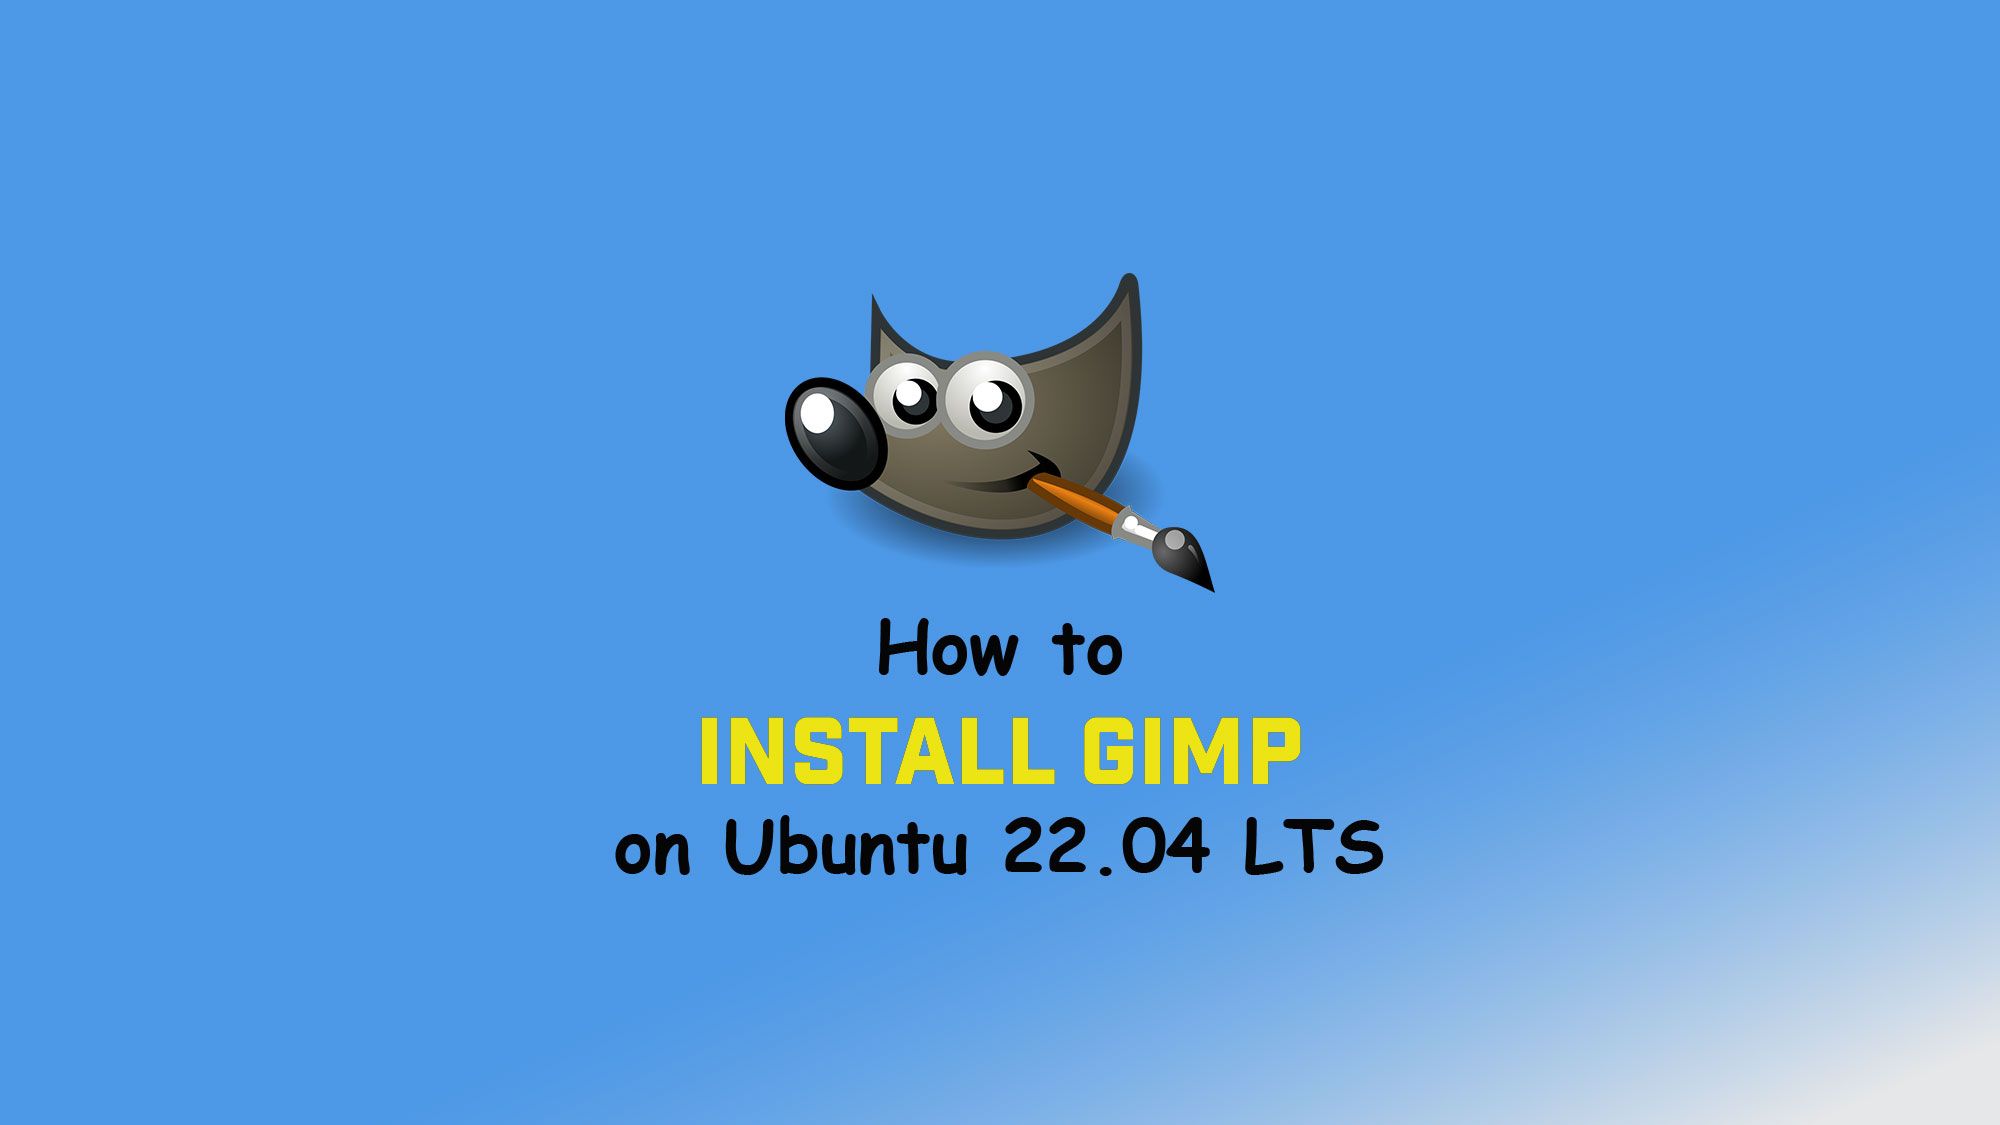 Install GIMP on Ubuntu 22.04 LTS